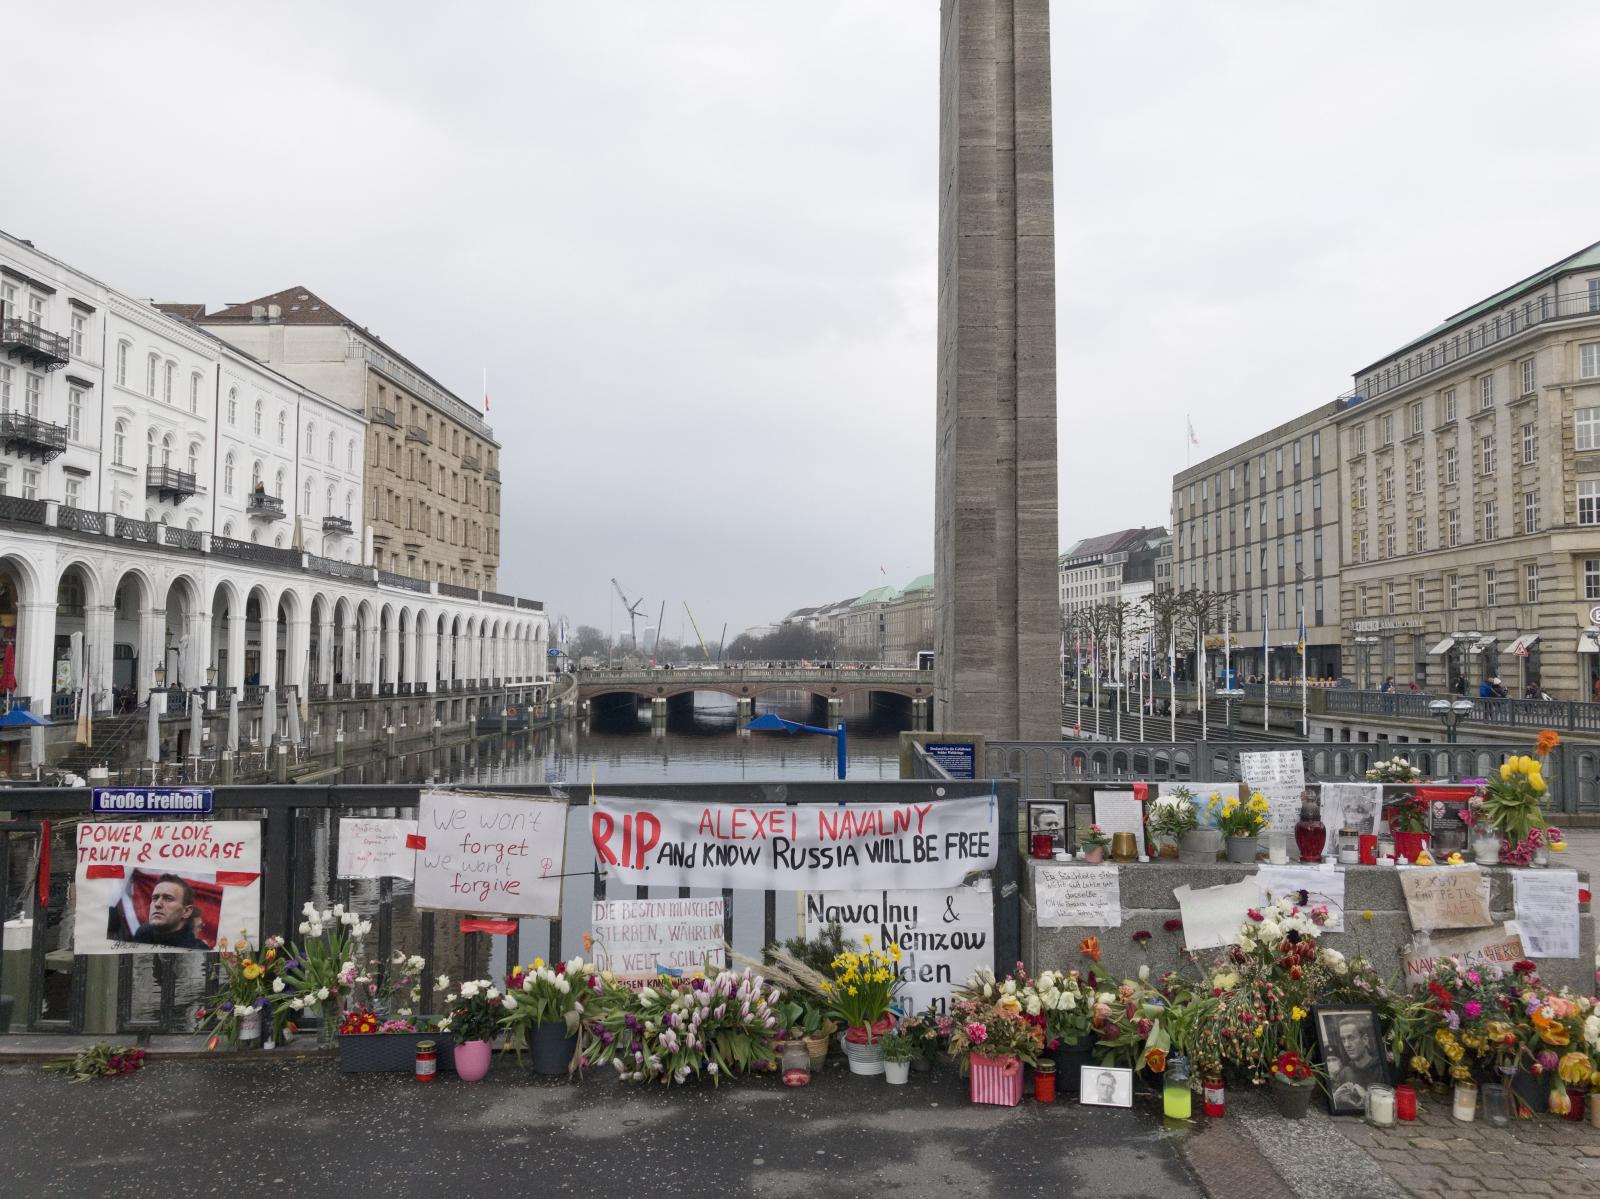 Memorial for Alexei Navalny | Buy this image